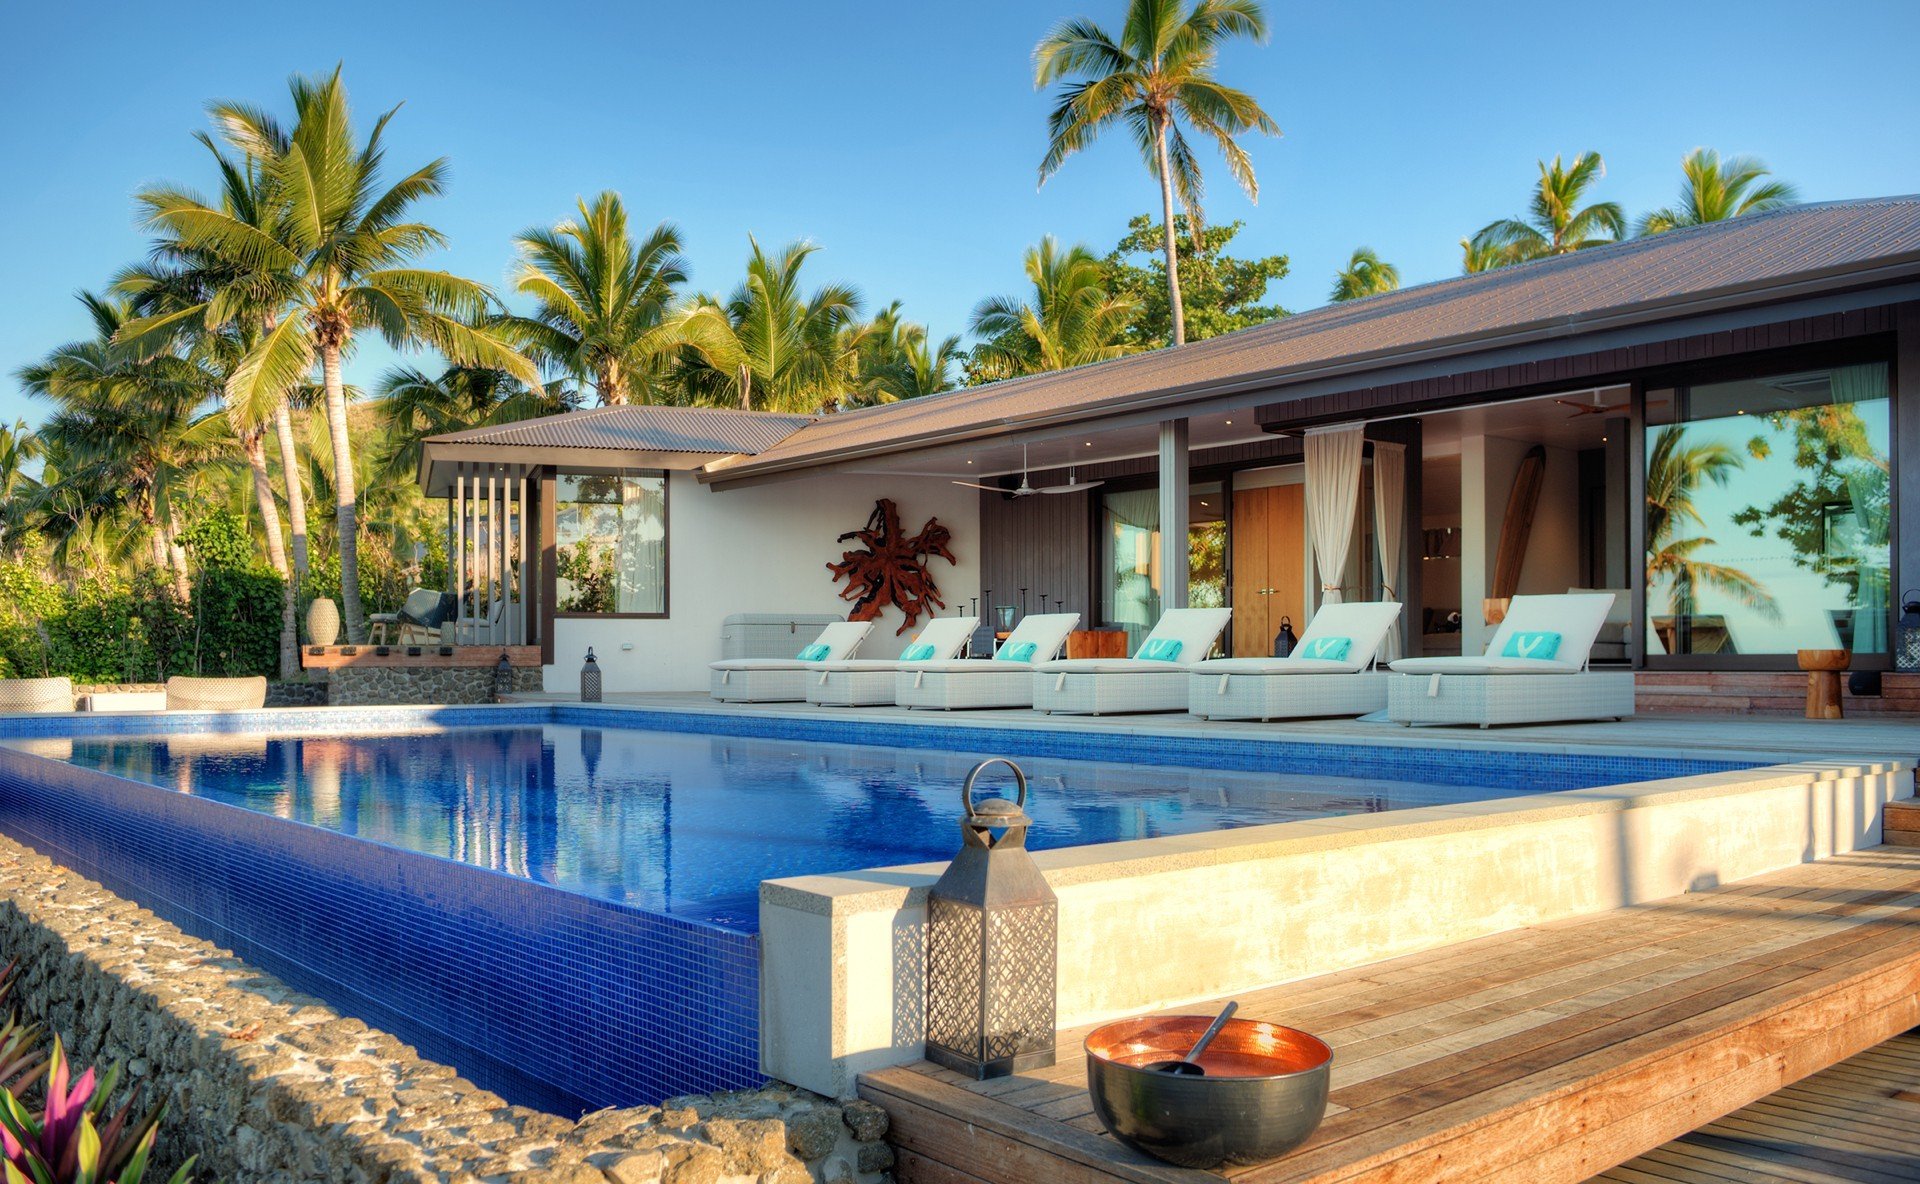 The Beachouse - villa The Beachouse Fiji Islands | Isle Blue1920 x 1184